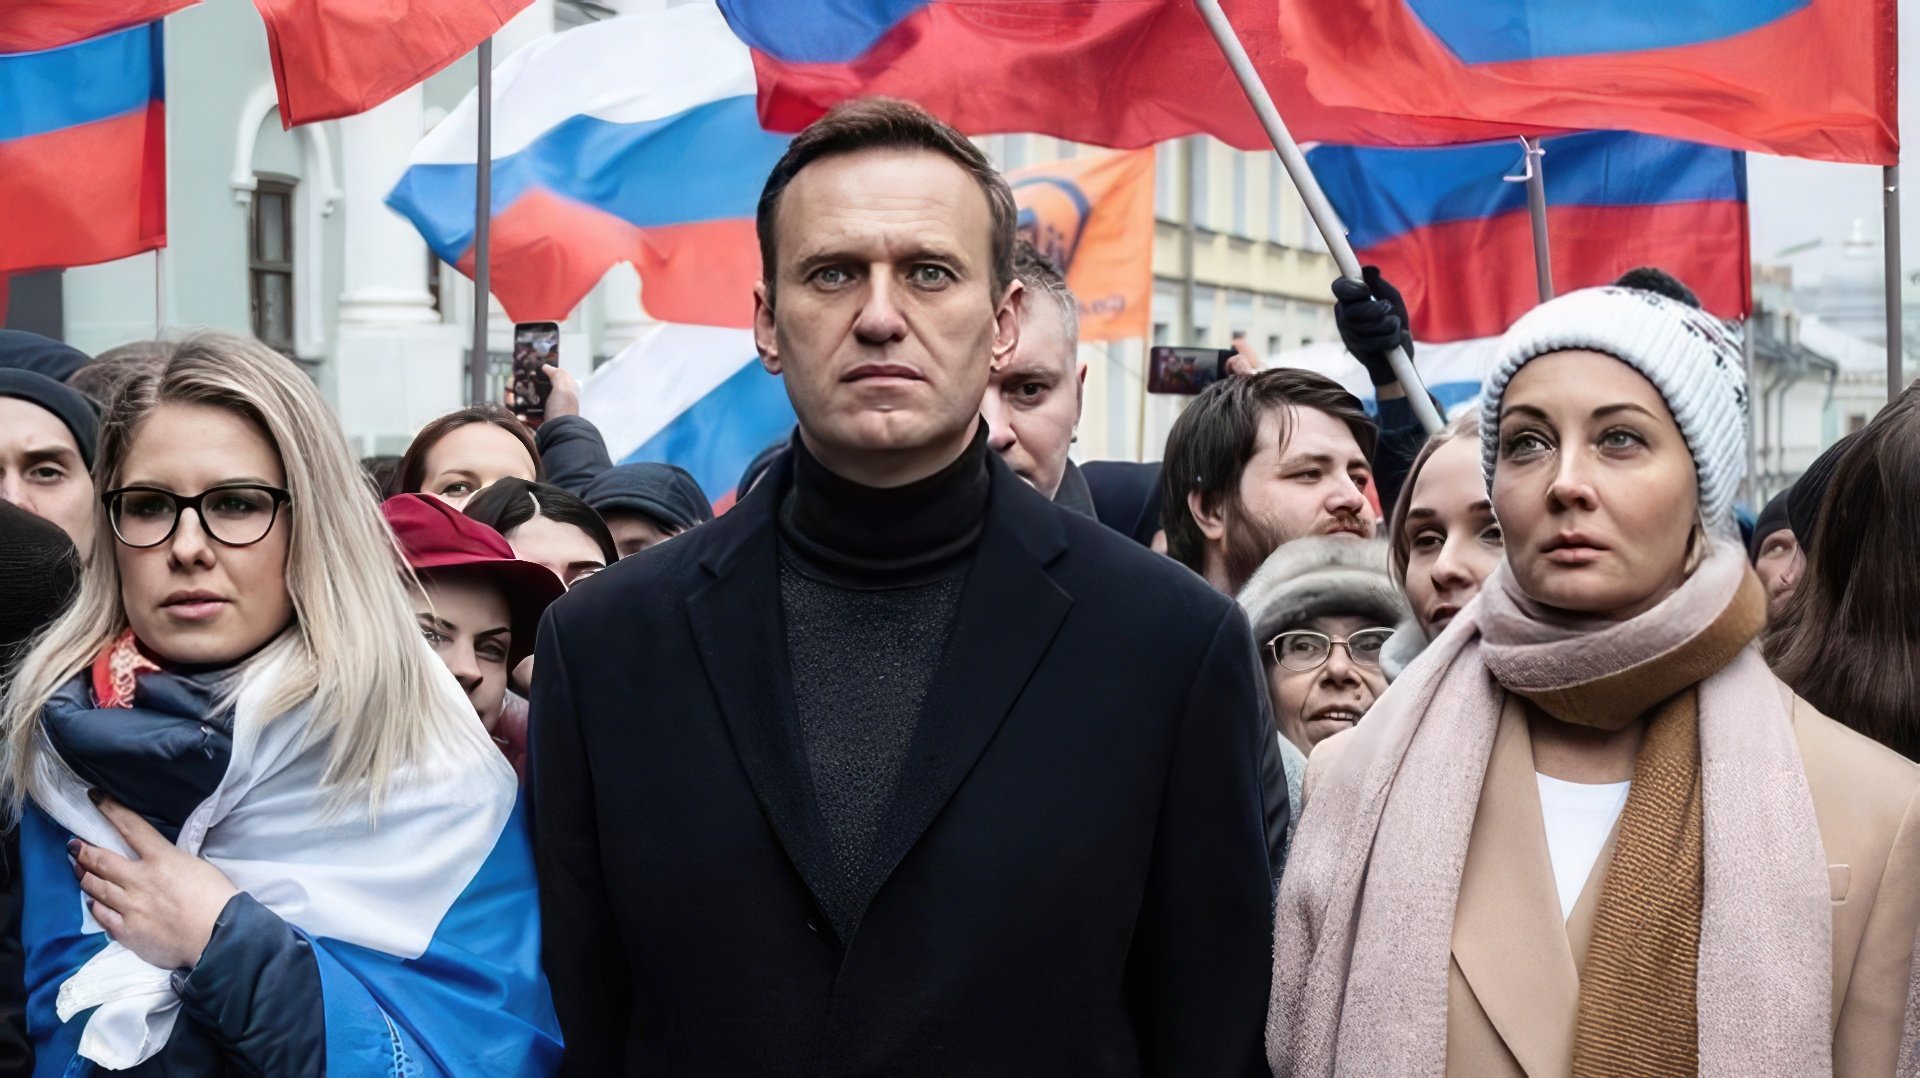 Yulia Navalnaya supports her husband and shares his views